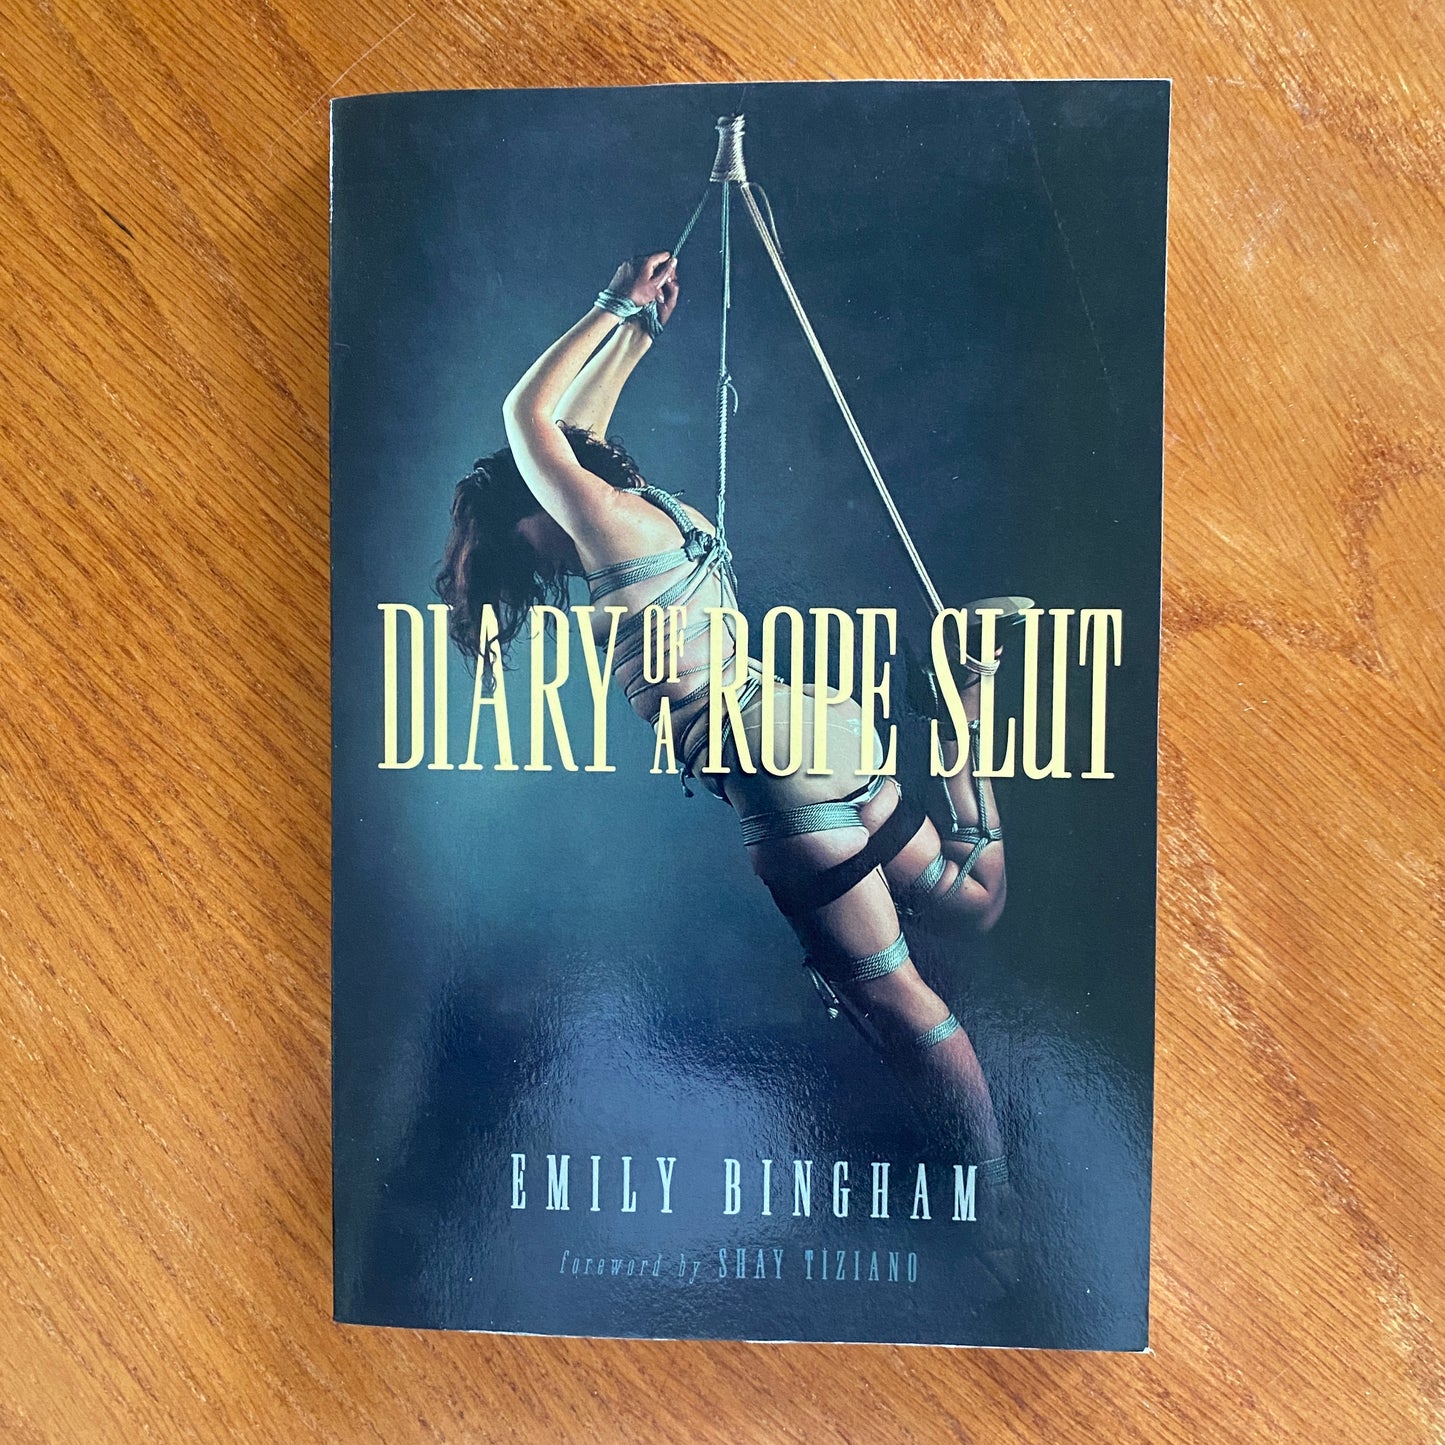 Diary Of A Rope Slut - Emily Dingham